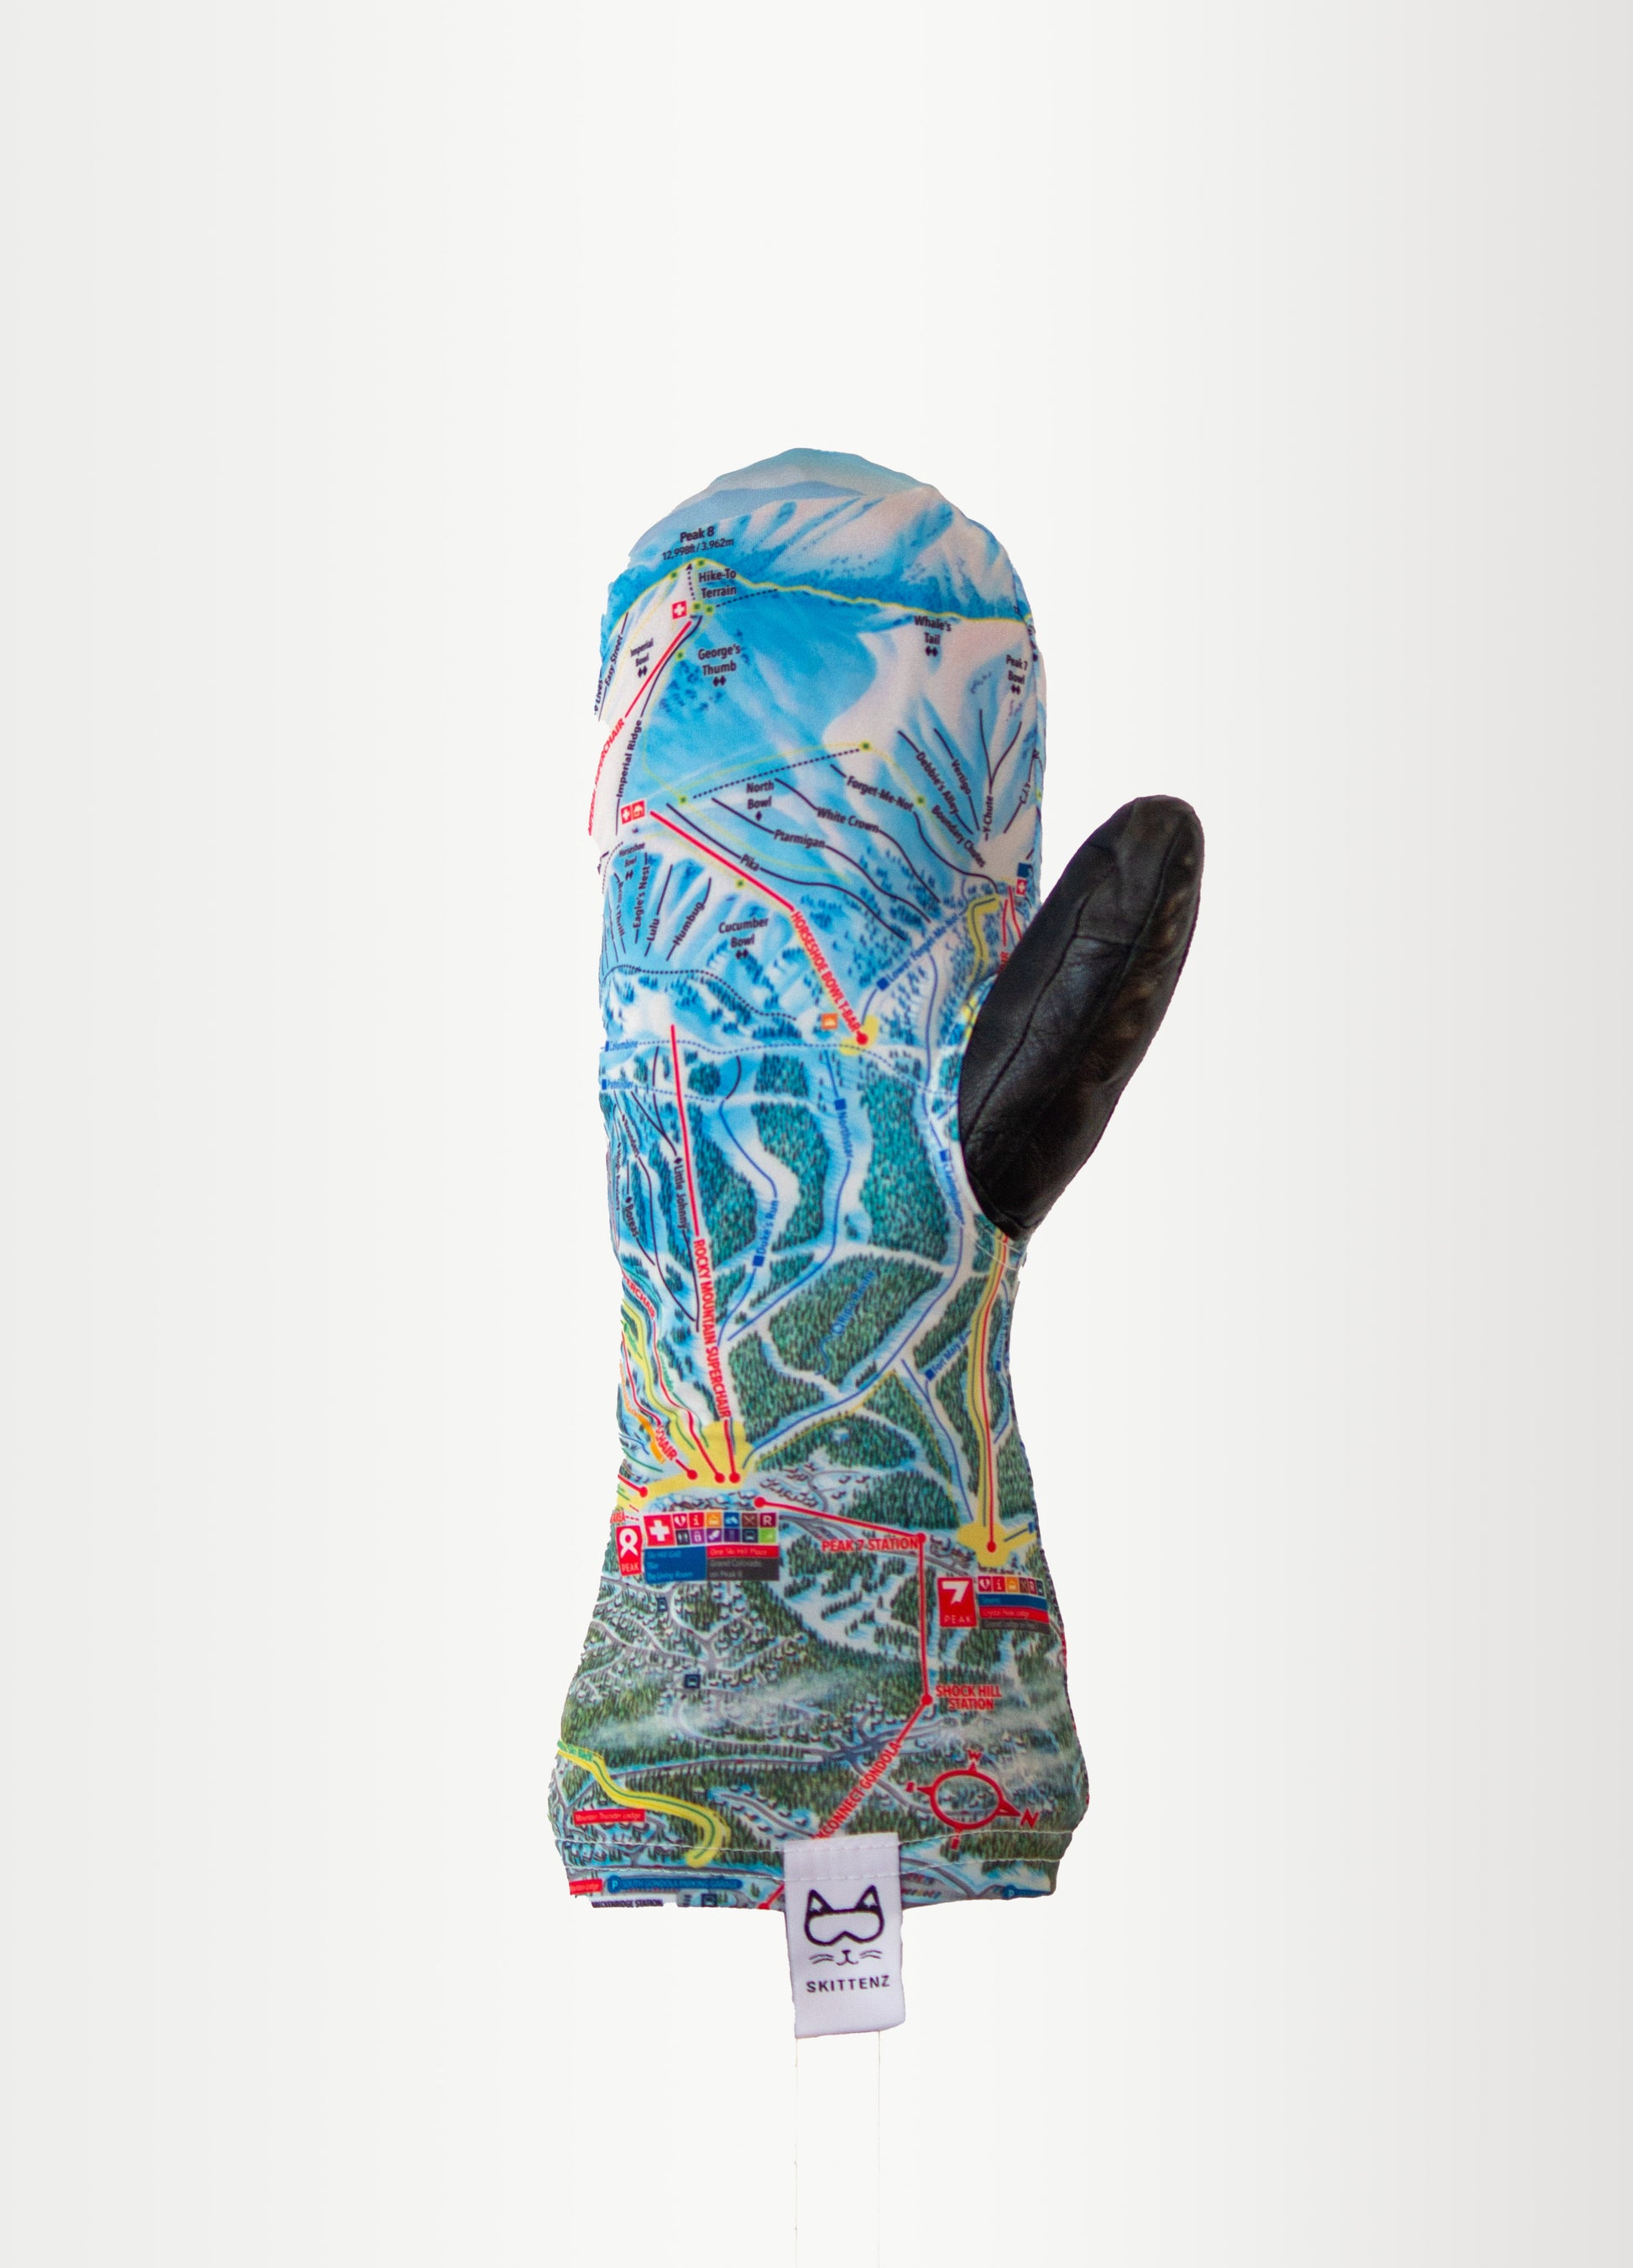 Breckenridge Ski or Snowboard Trail Map Skins for Mittens or Gloves